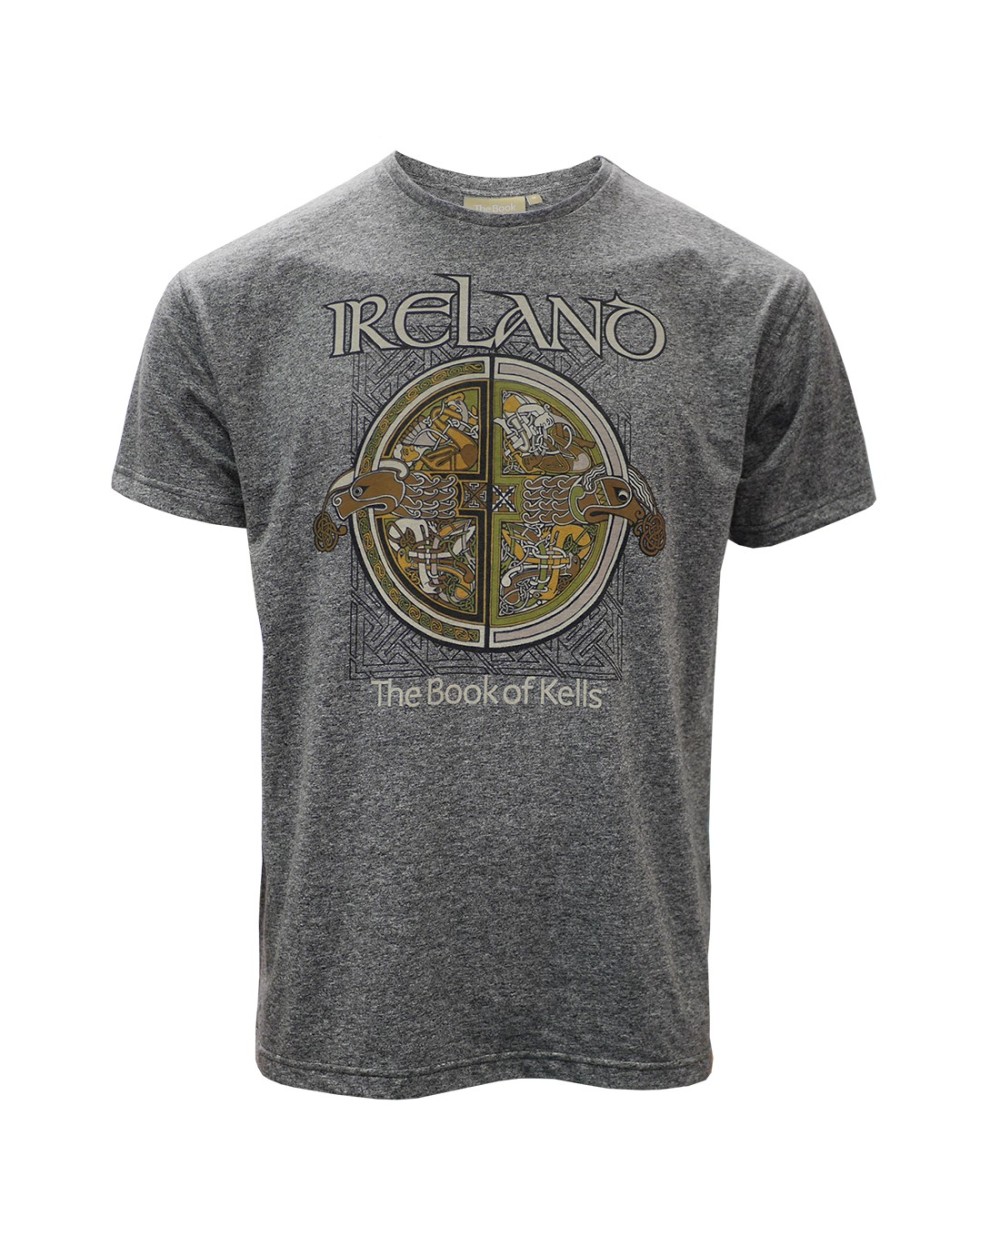 Official Irish Clothing